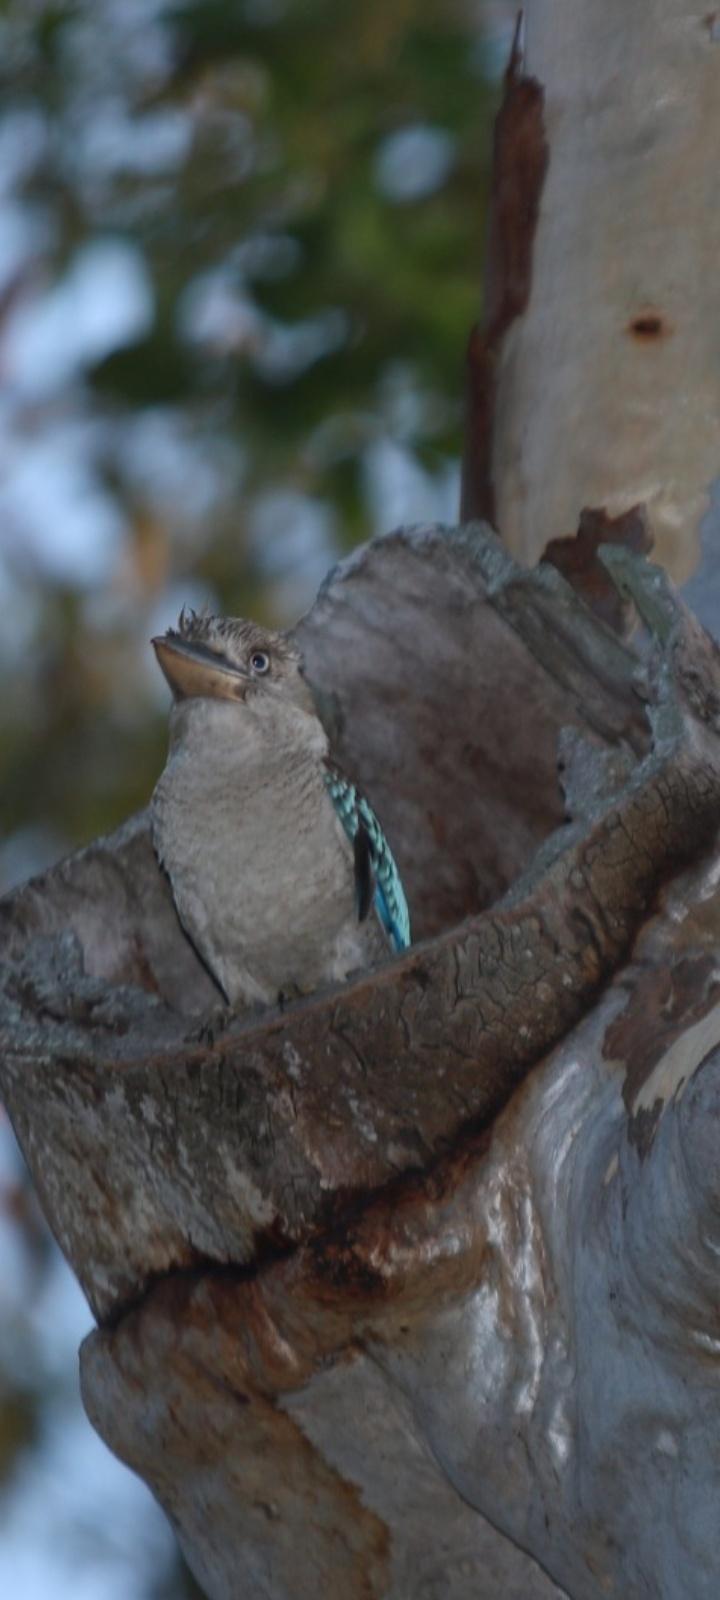 Kookaburra sitting in on a worn gum tree from down below.